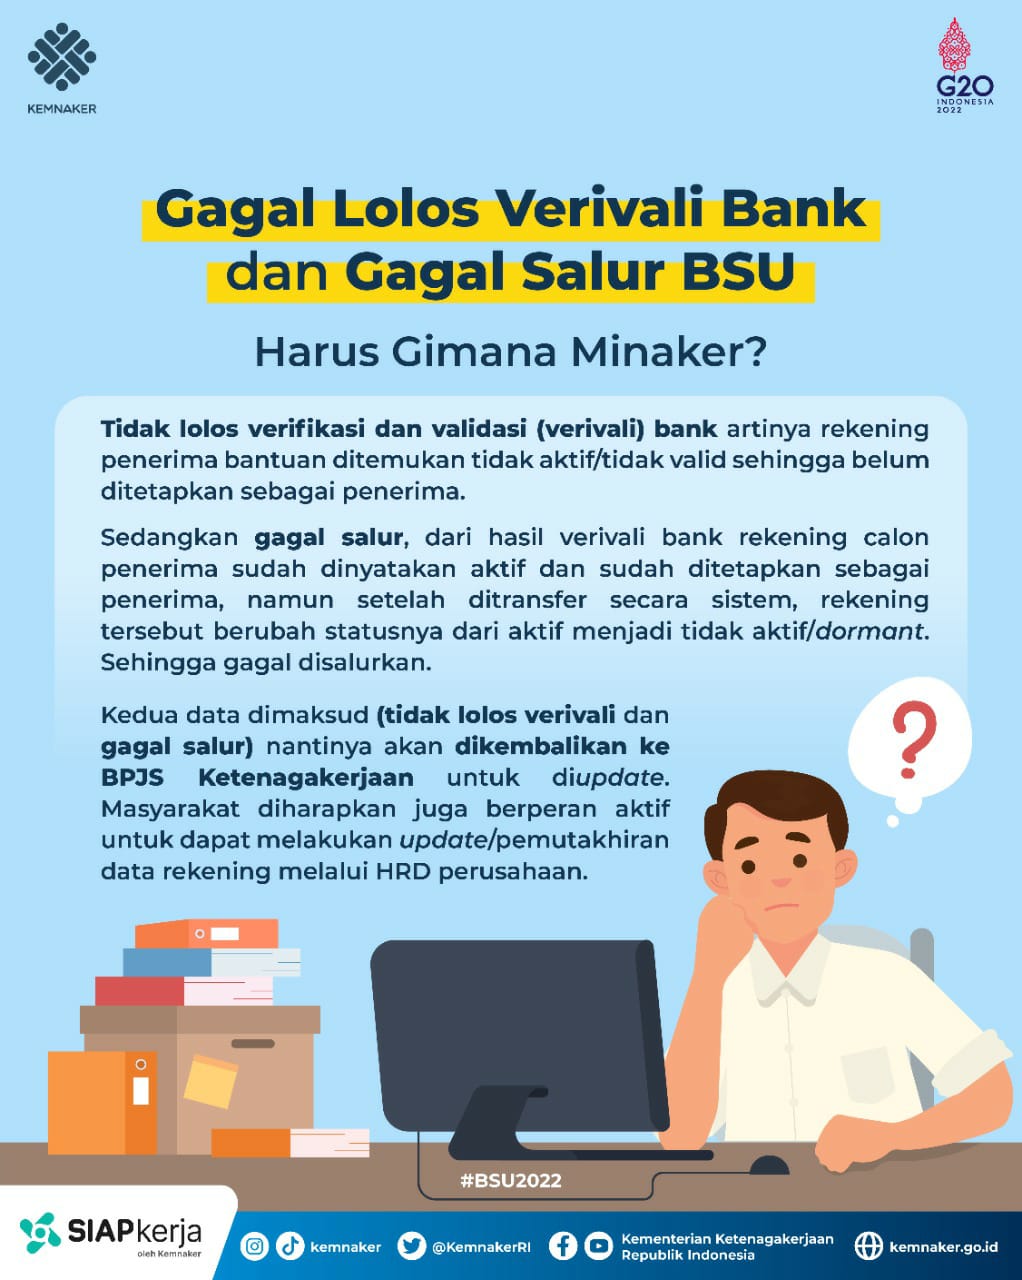 Begini Penjelasan Kemnaker RI Soal Gagal Lolos Verivali Bank yang Sebabkan Gagal Salur BSU